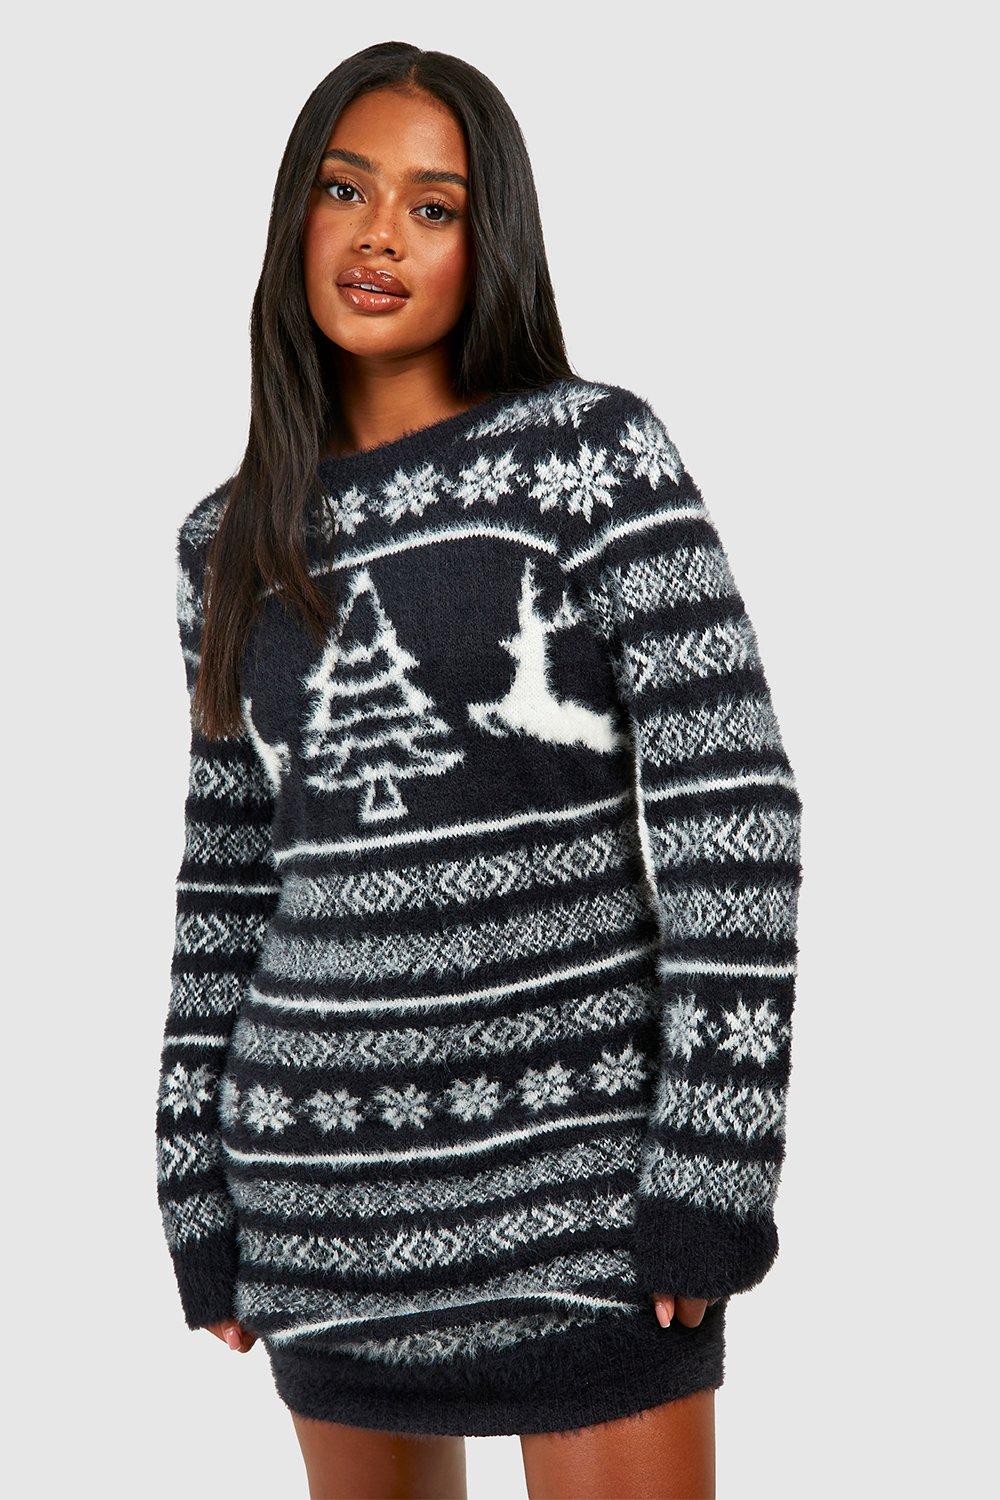 Christmas Fluffy Knitted Jumper Dress